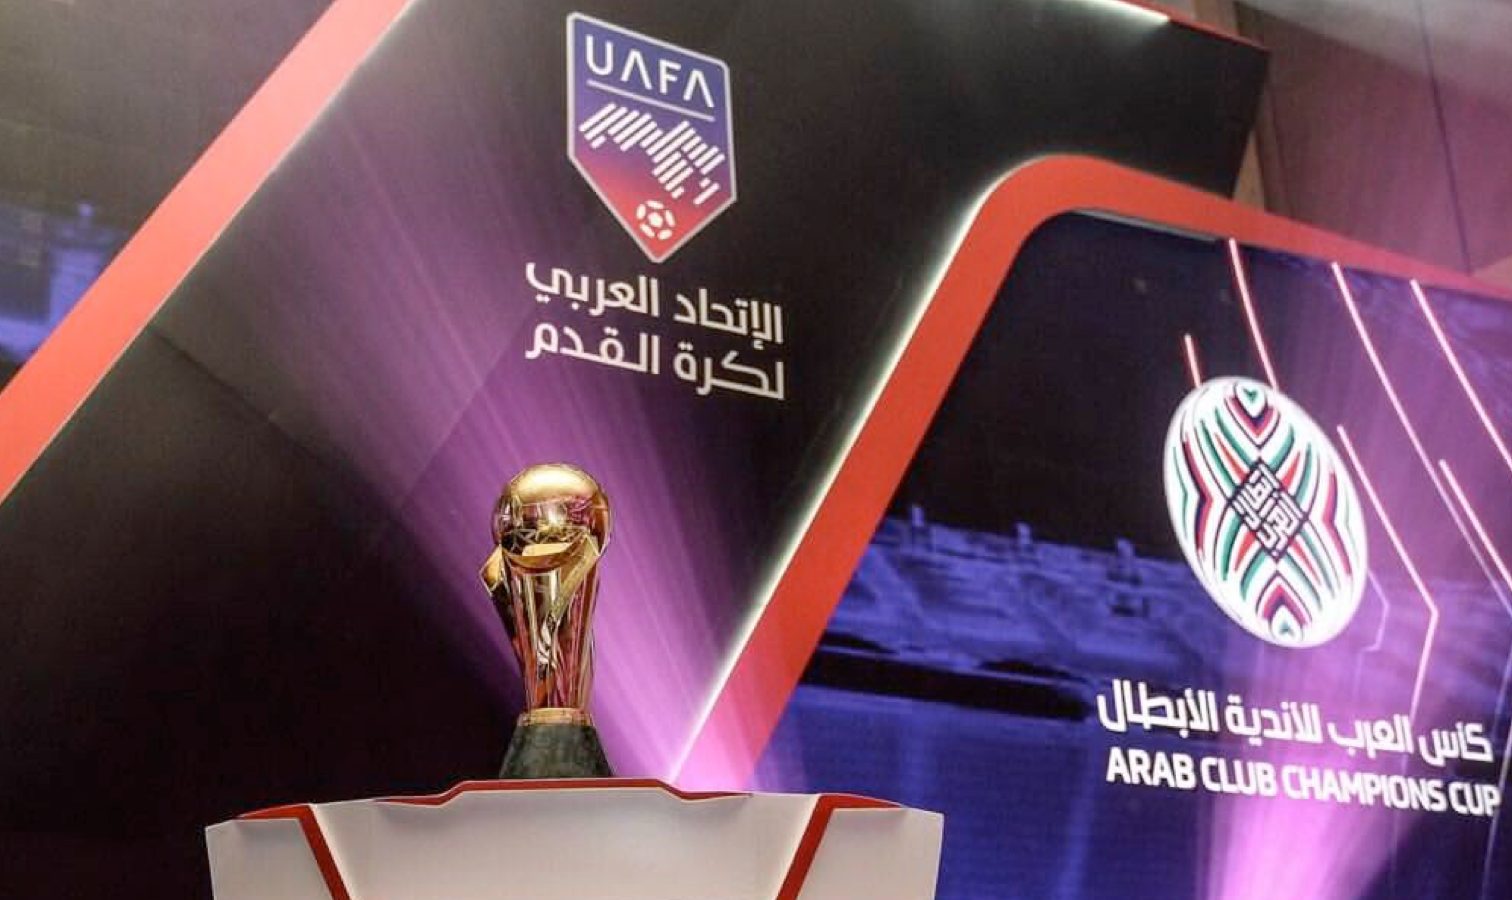 uafa arabe club champions cup